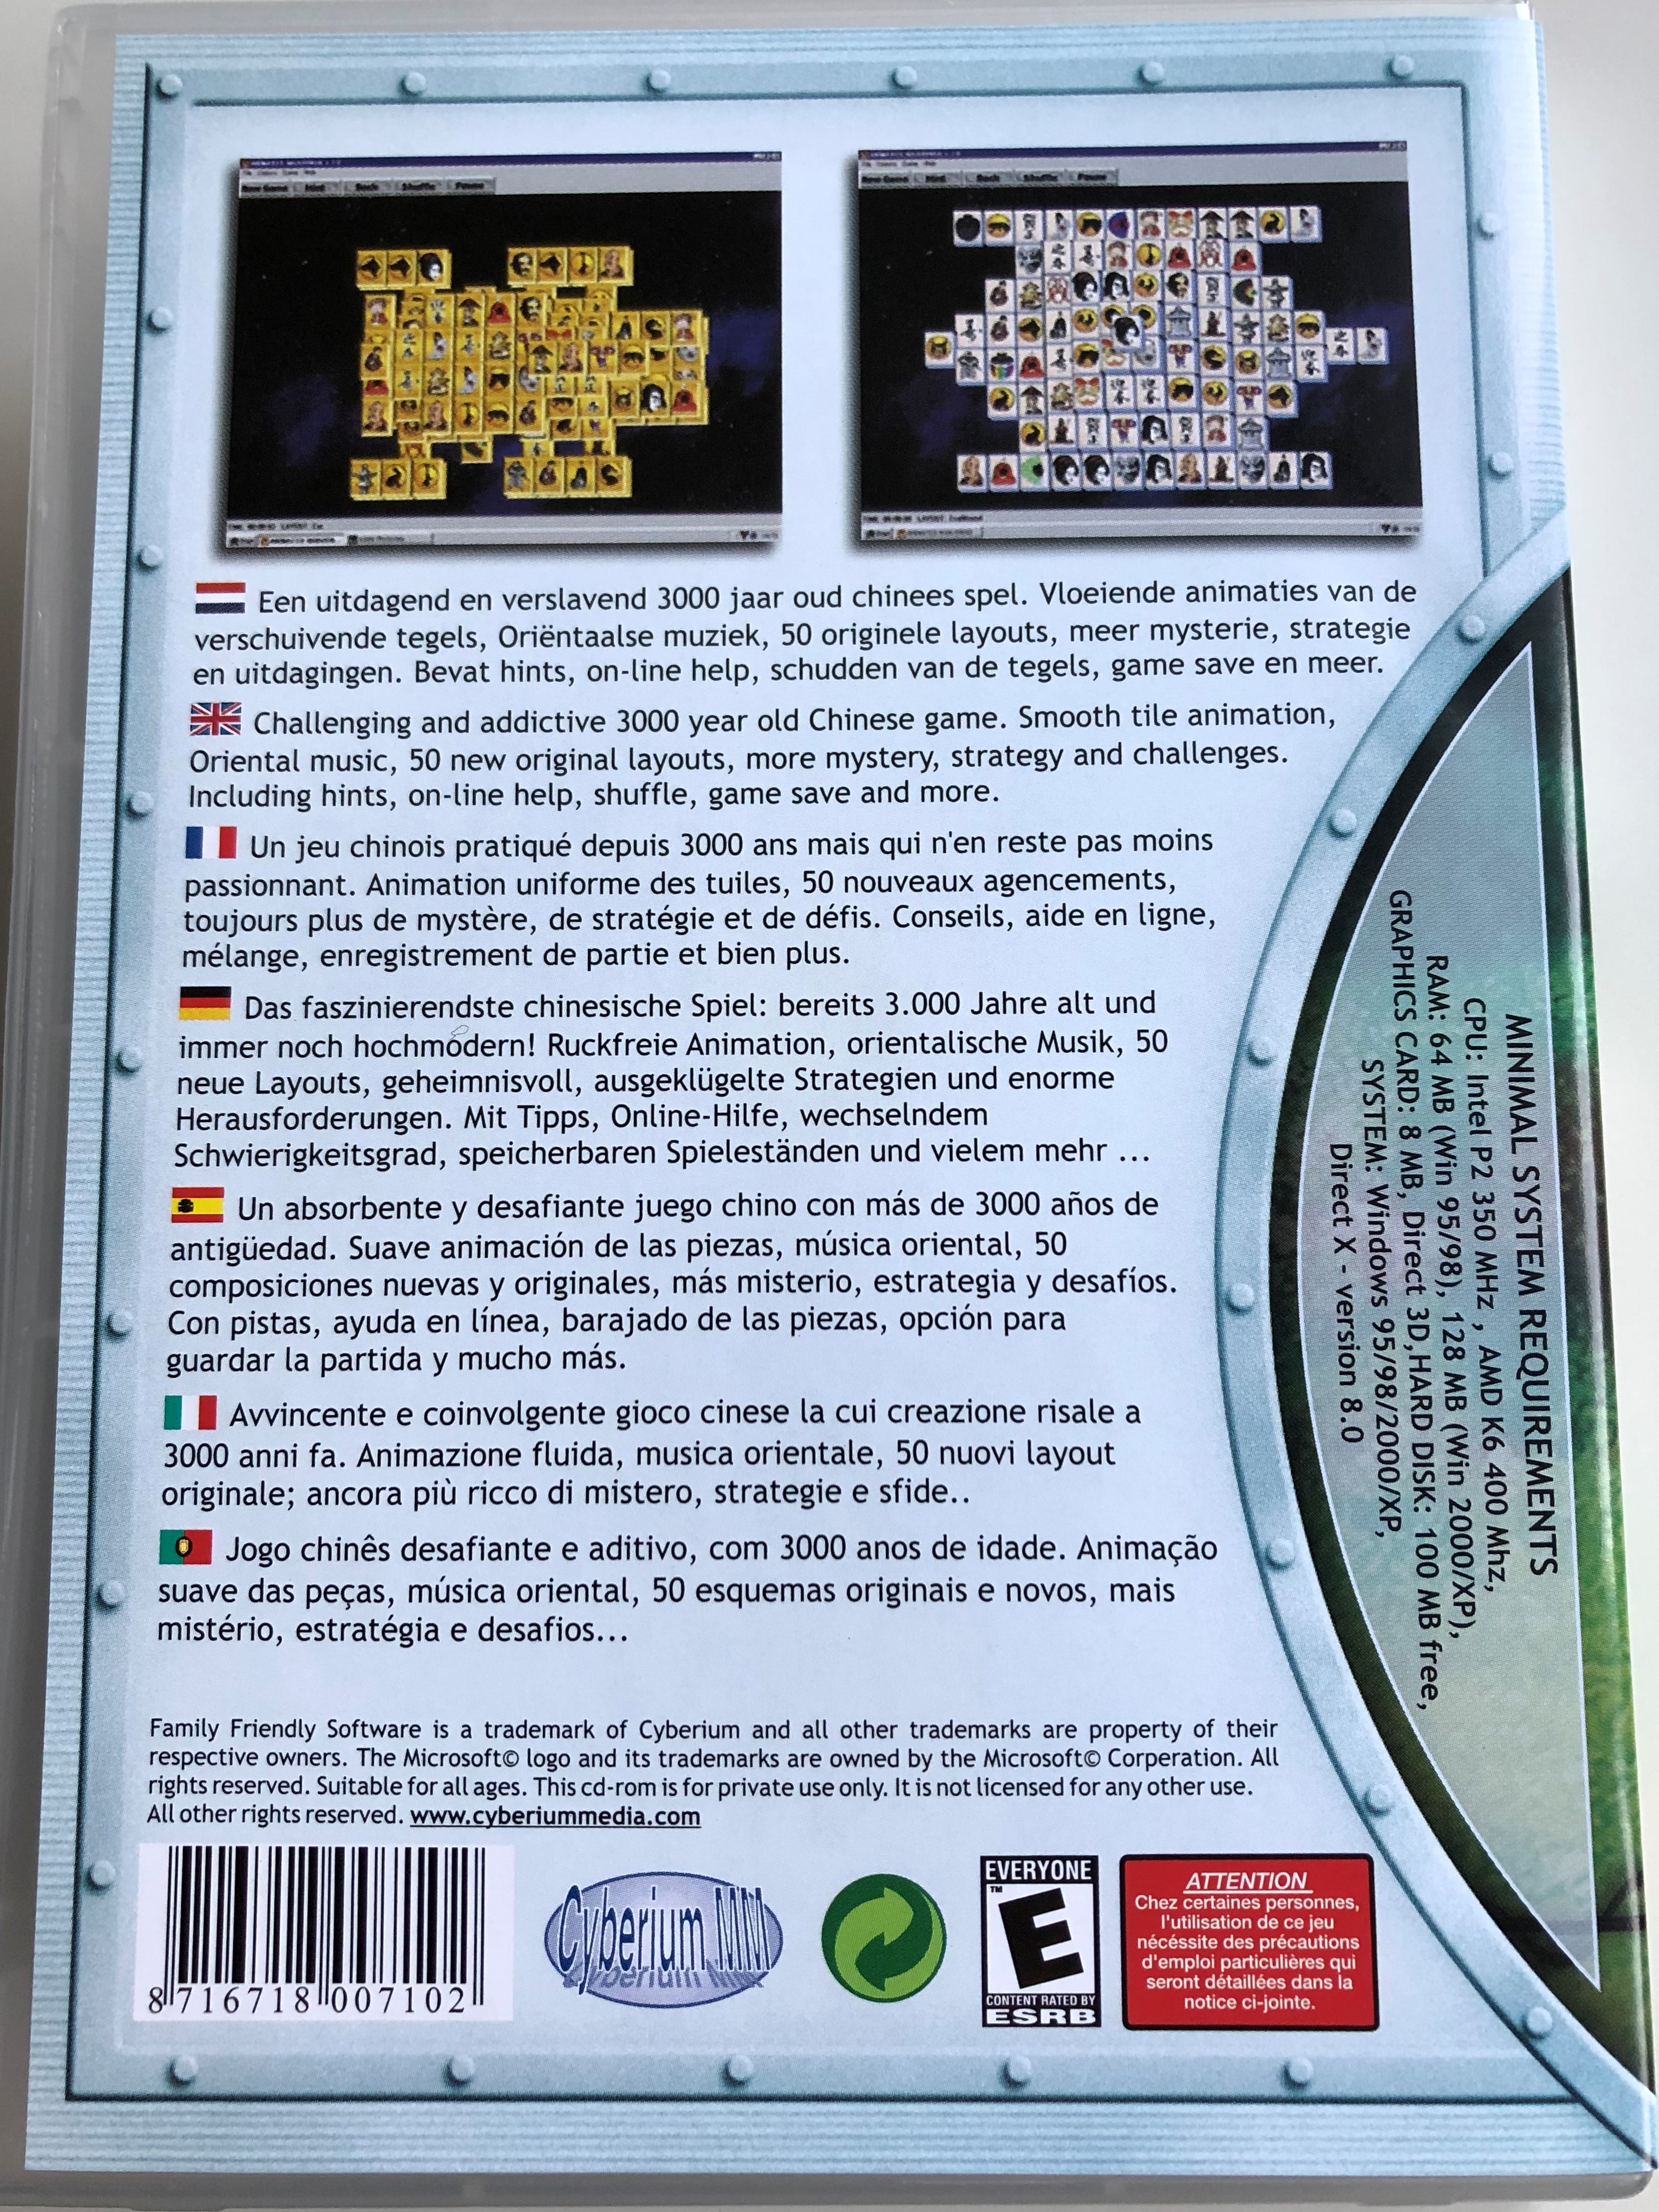 mahjongg-thinking-game-family-friendly-software-pc-cd-rom-3.jpg